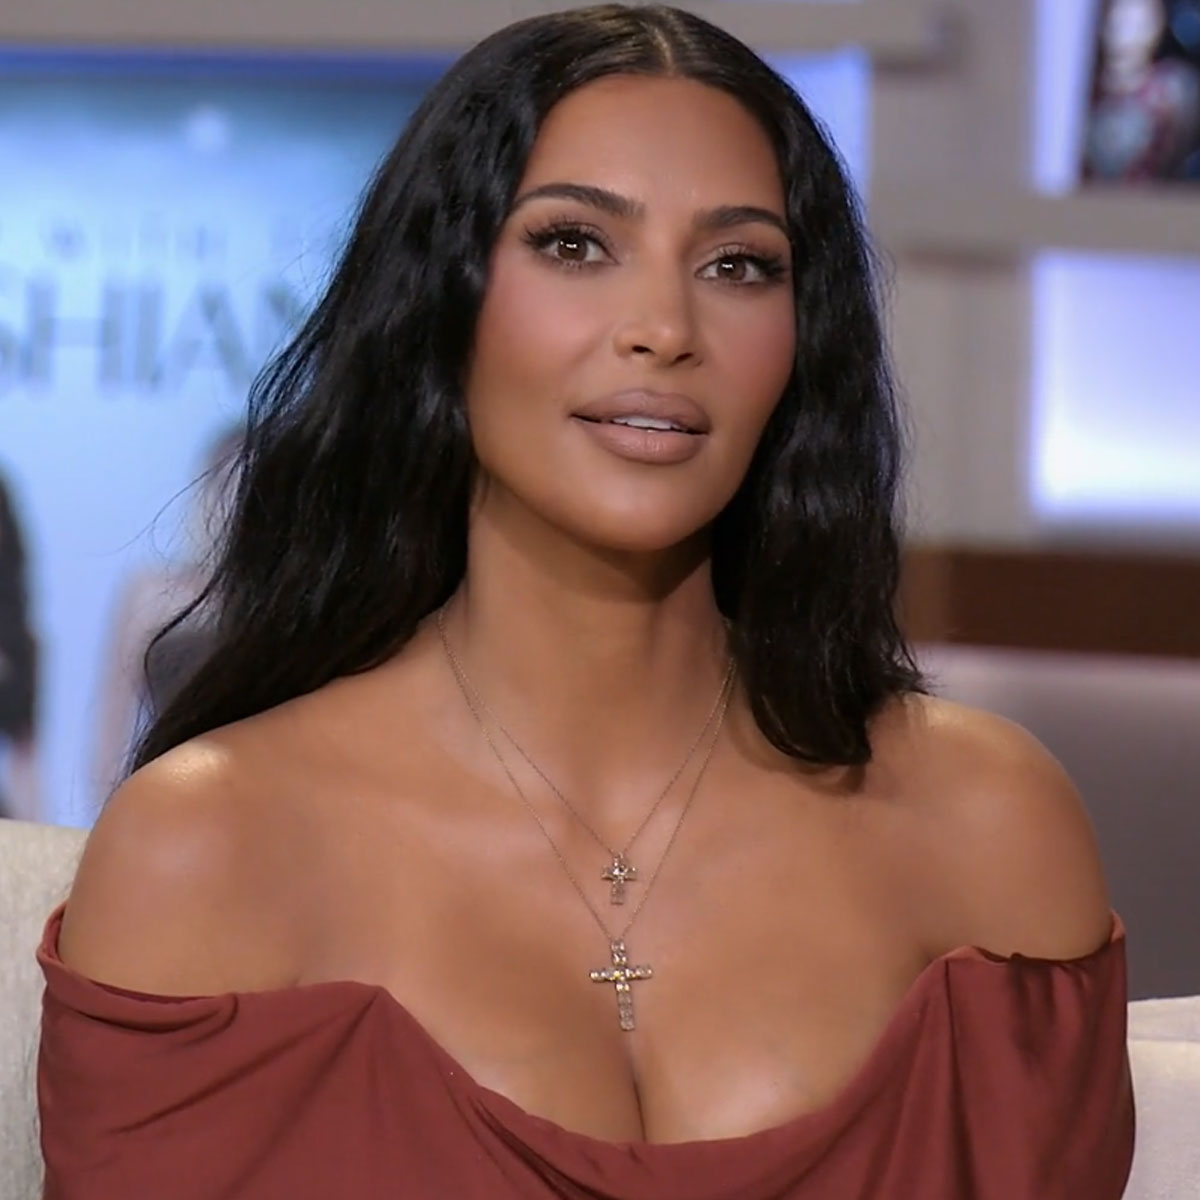 Kim Kardashian Leaked Mms - Kim Kardashian Admits Infamous Sex Tape Helped Success of KUWTK